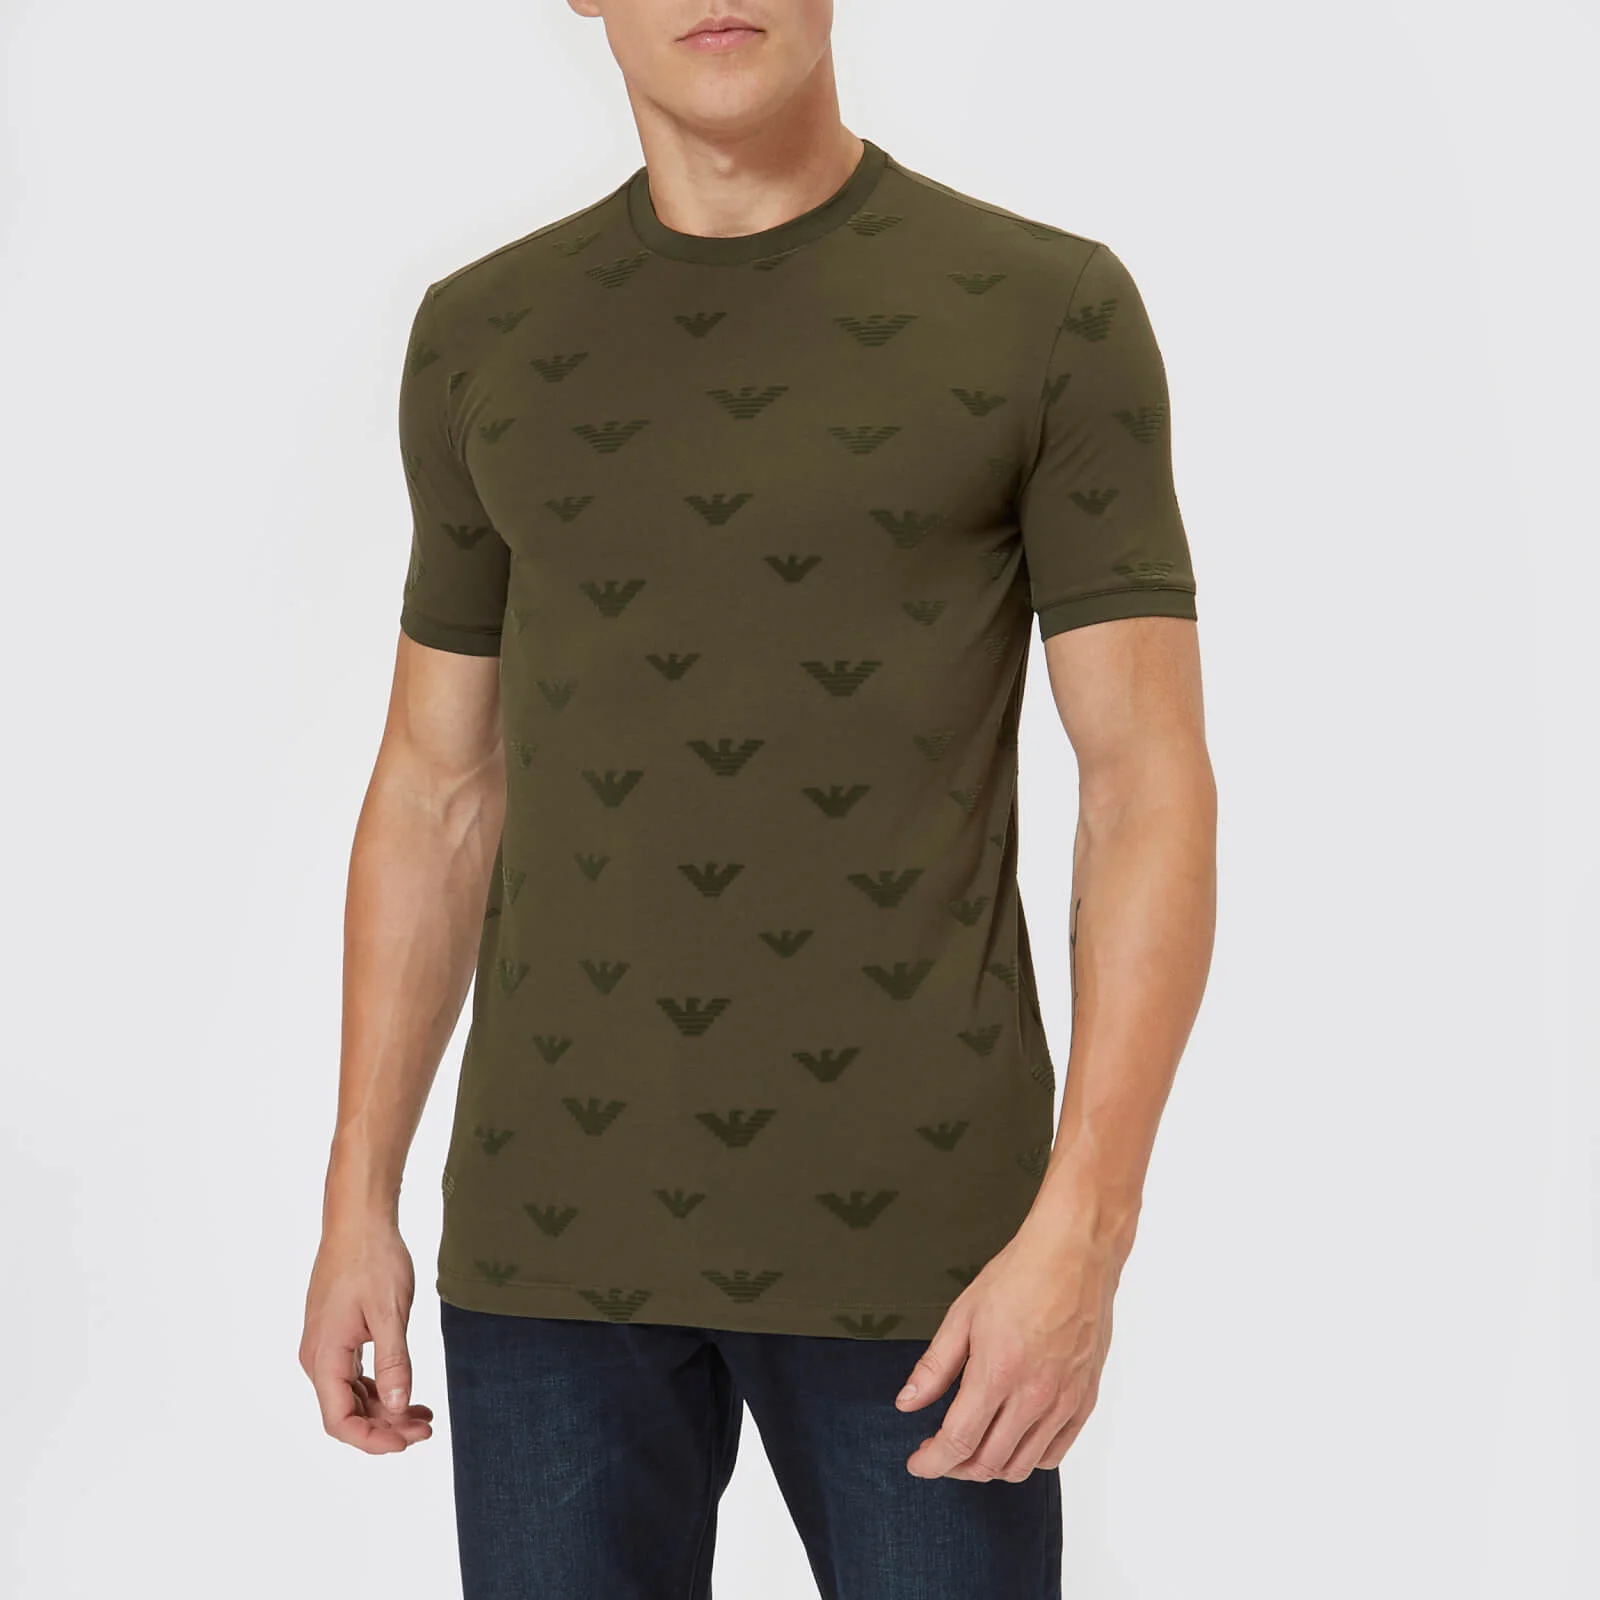 Emporio Armani Men's All Over Flock T-Shirt - Verde Militare Image 1